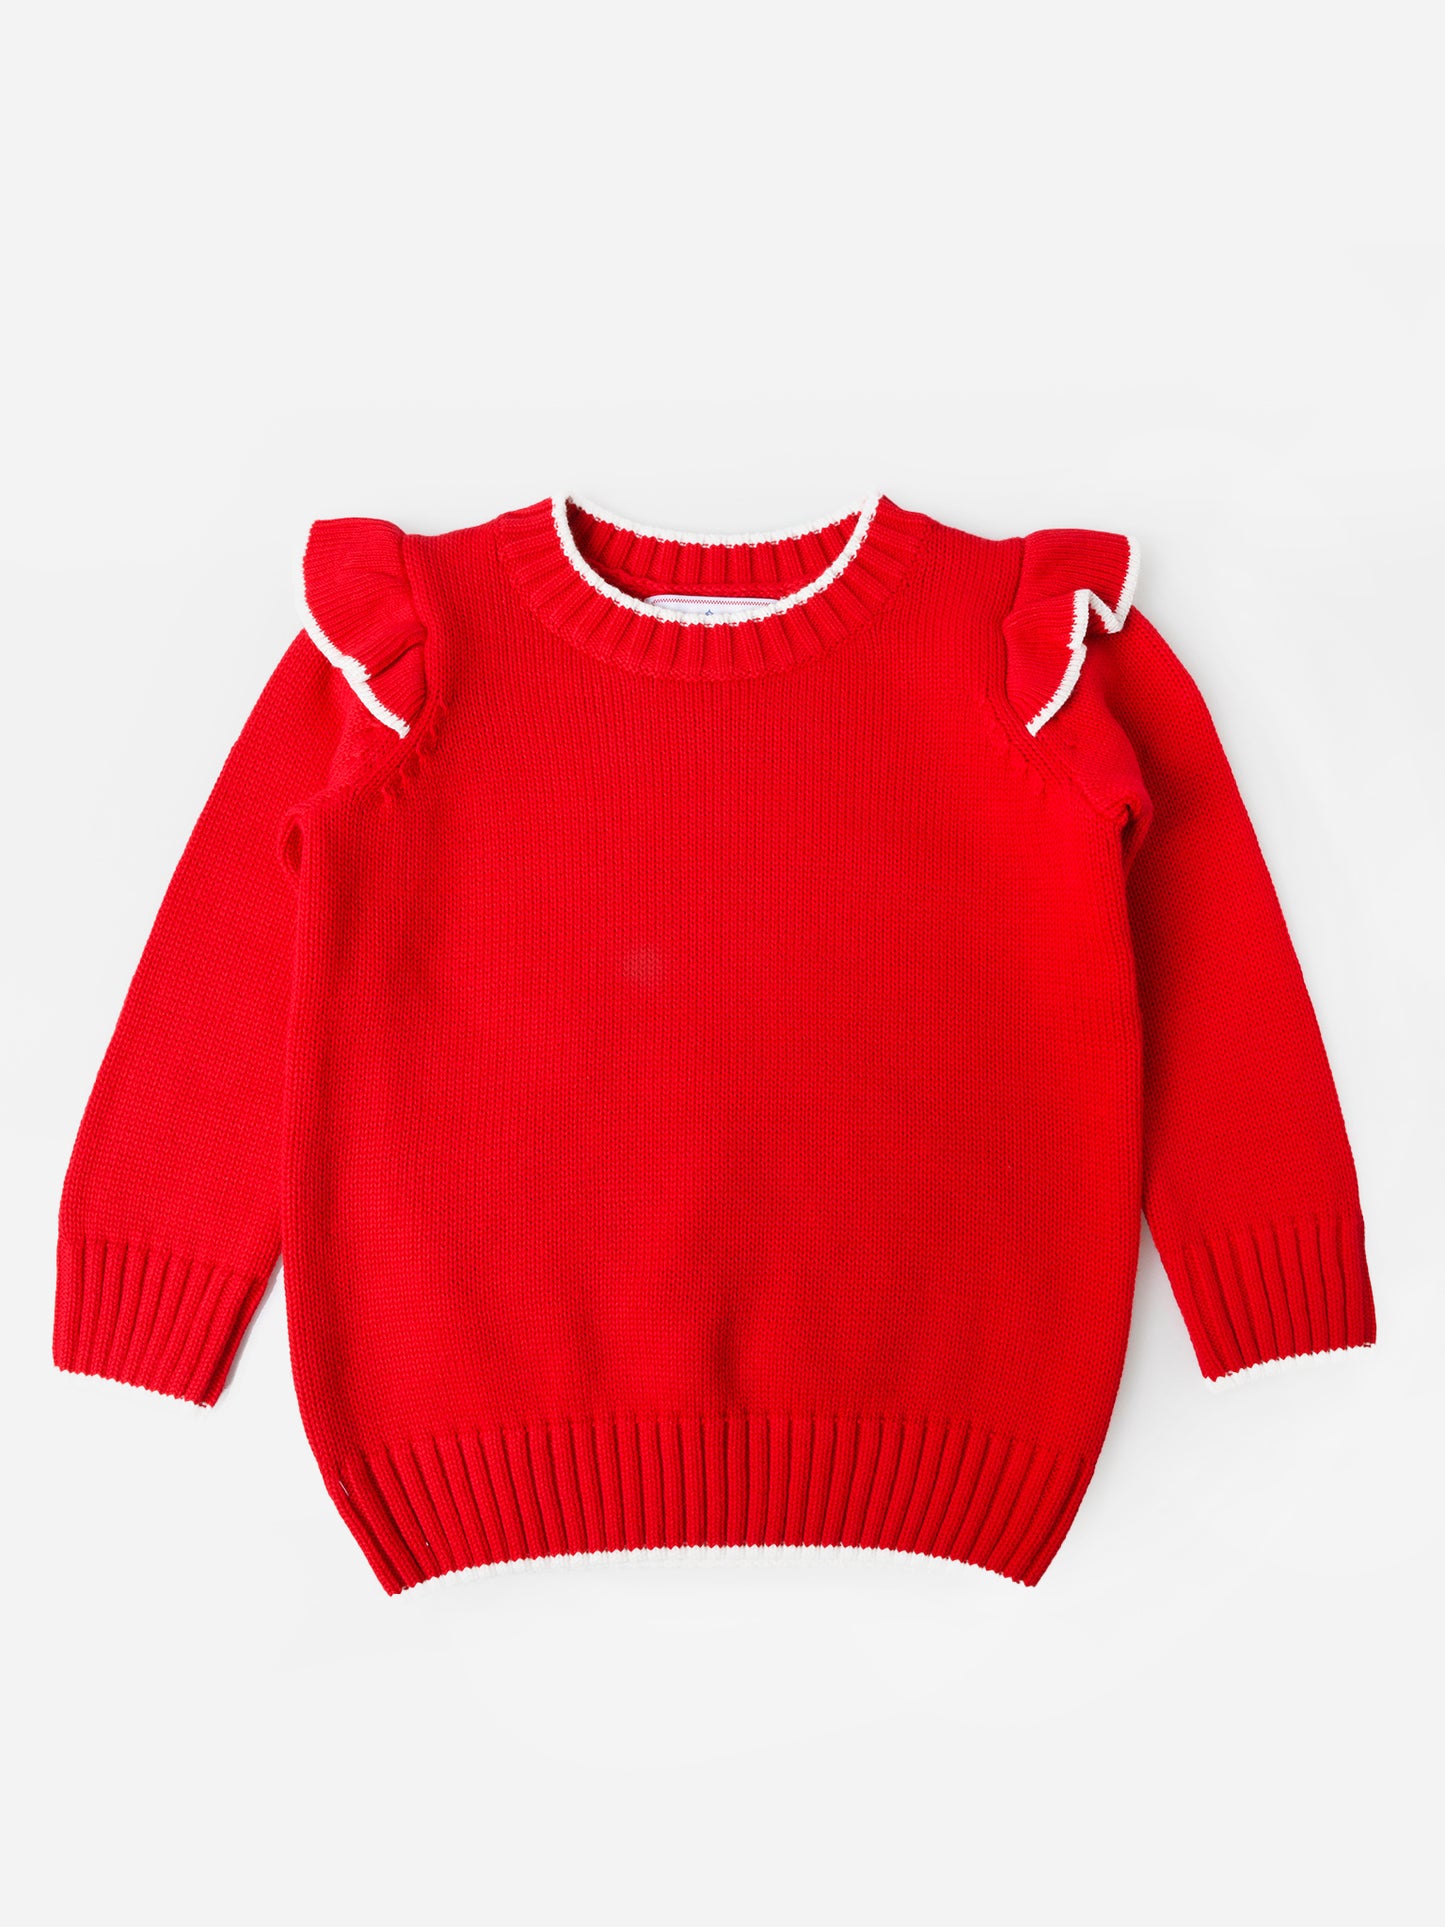 Classic Prep Girls' Caroline Sweater